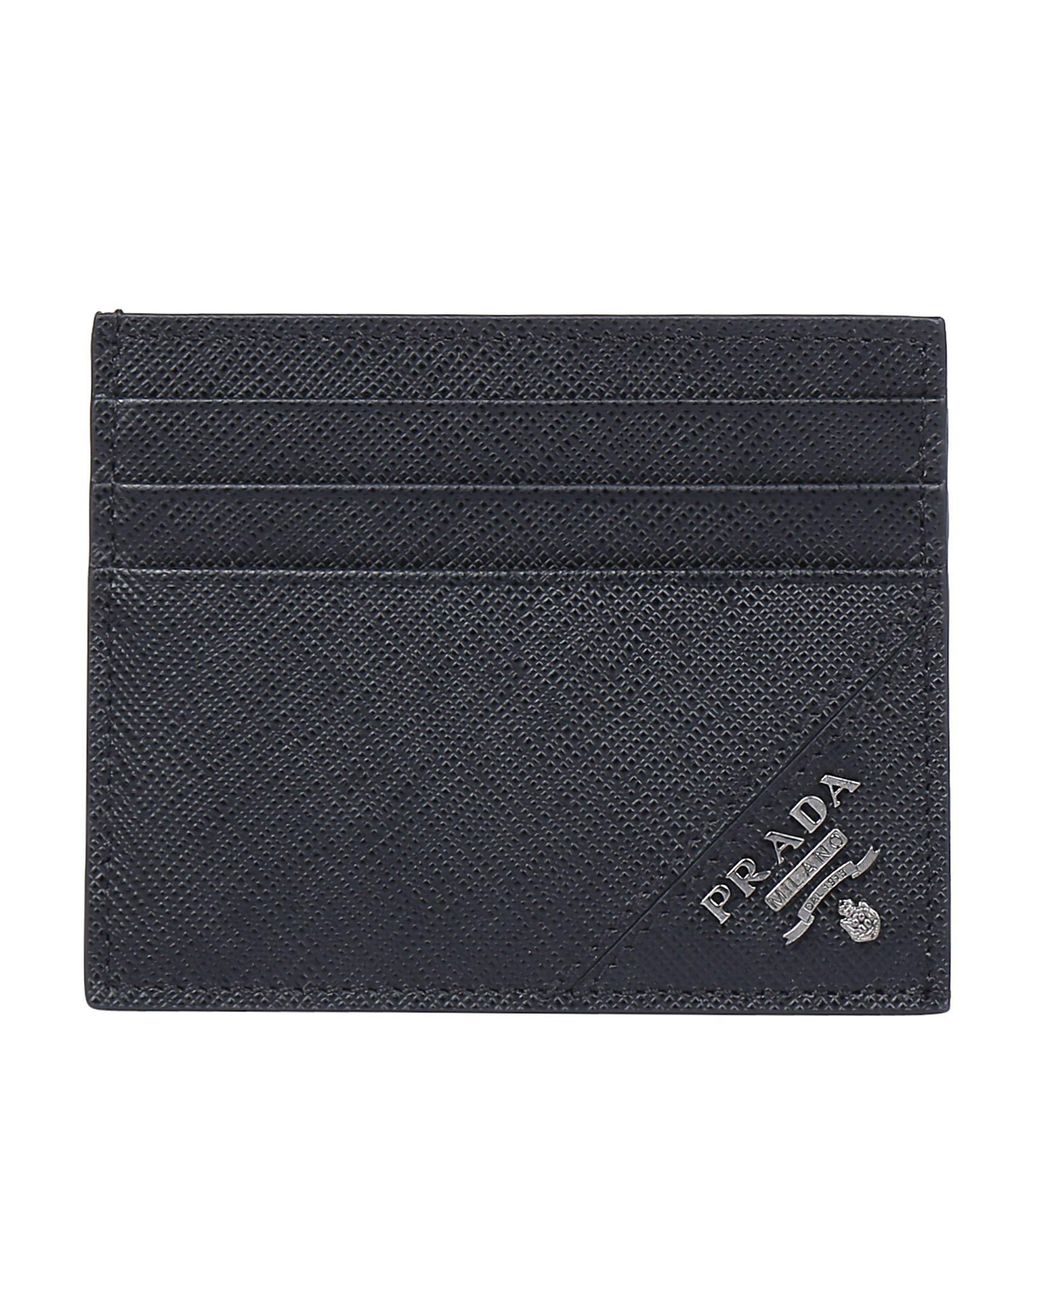 Prada Leather Classic Cardholder in Nero (Black) for Men - Save 43% - Lyst